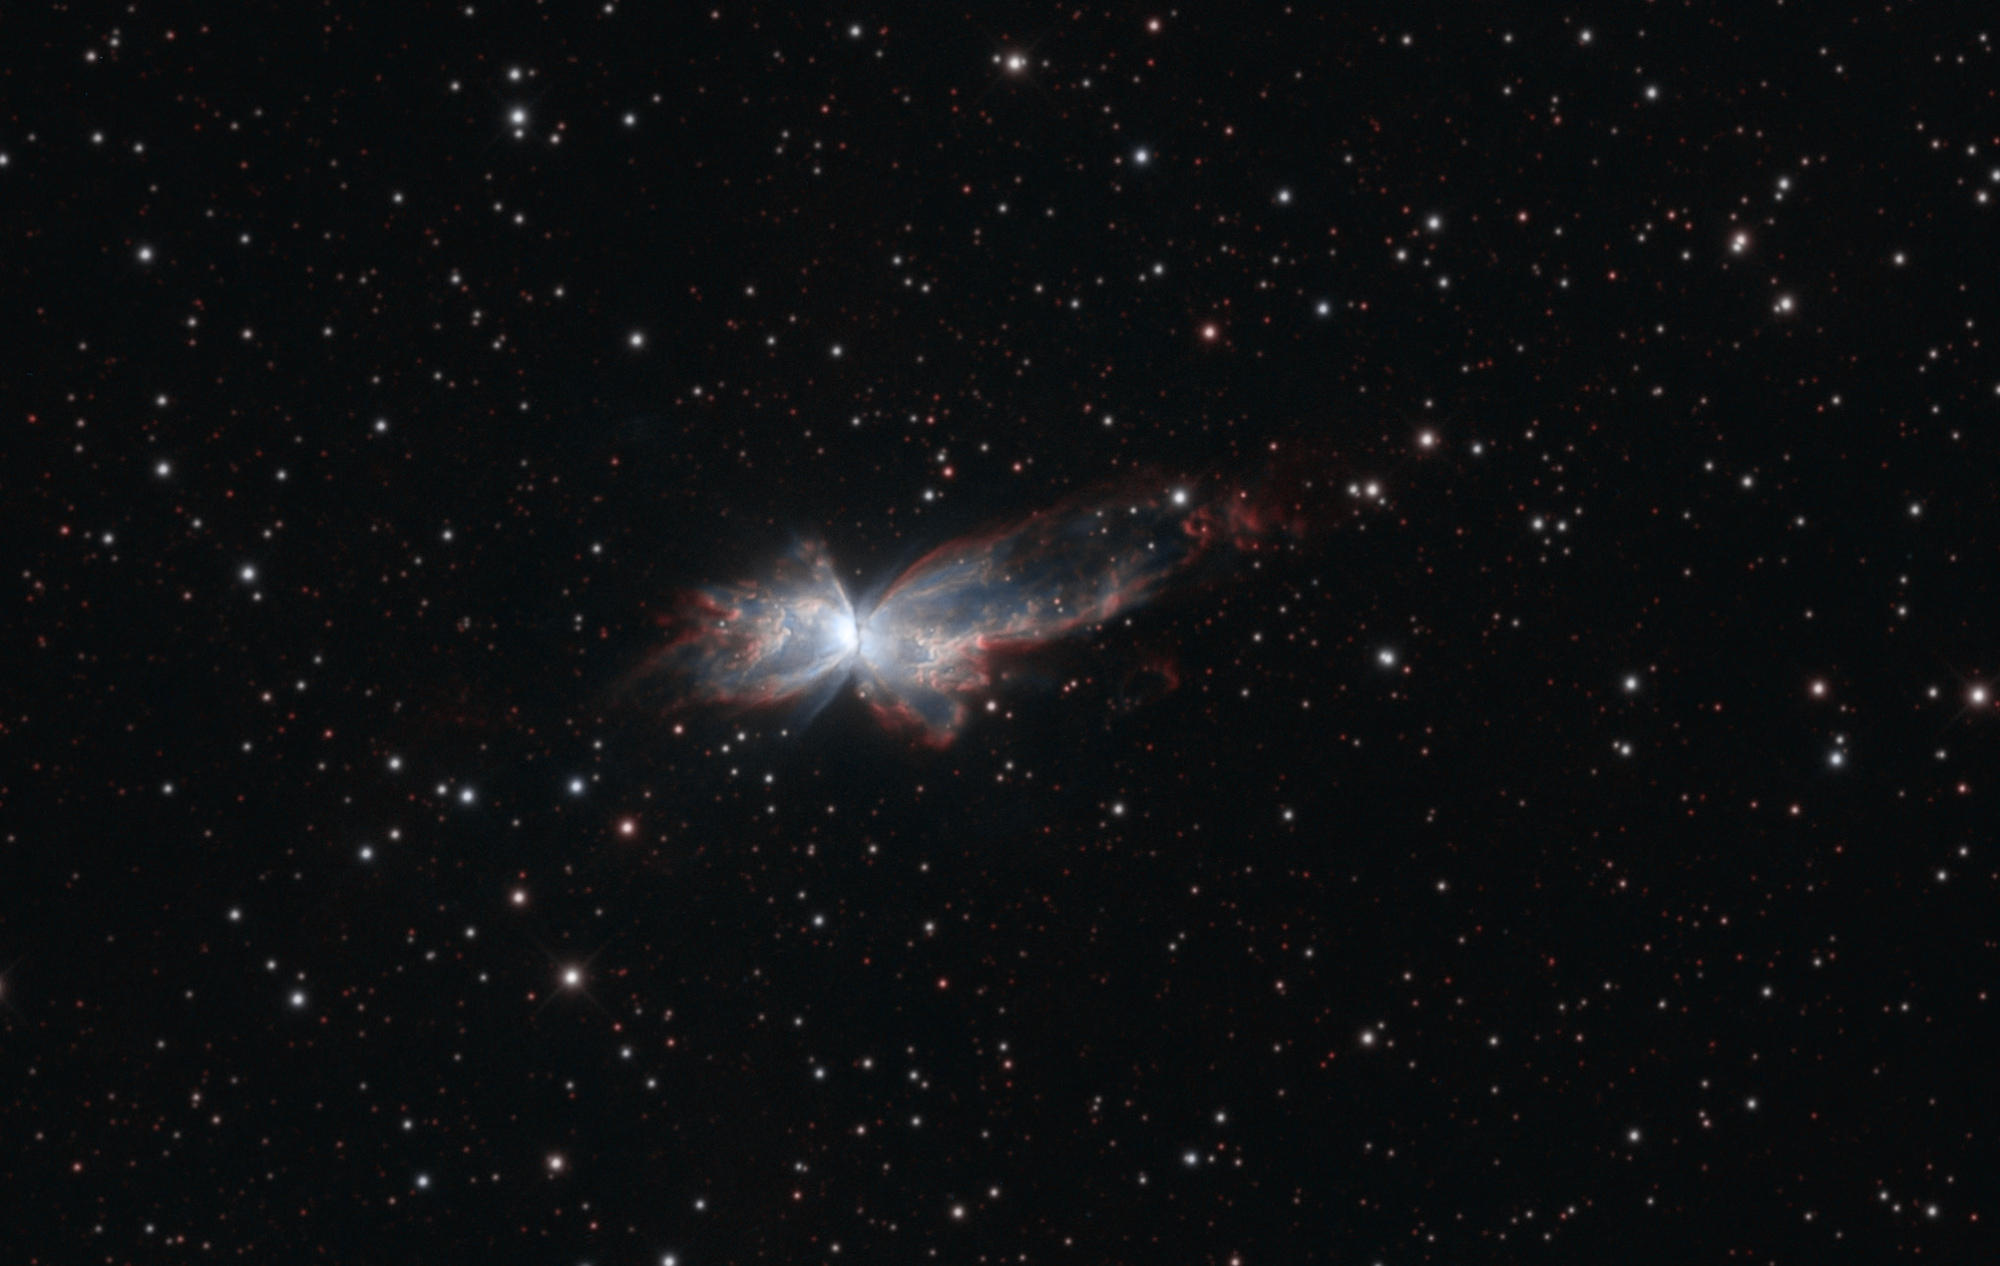 NGC6302_HaOIIIOIII-V3-1-PlusContrast.thumb.jpg.588f0cb427804236ce3f6ec195839f40.jpg